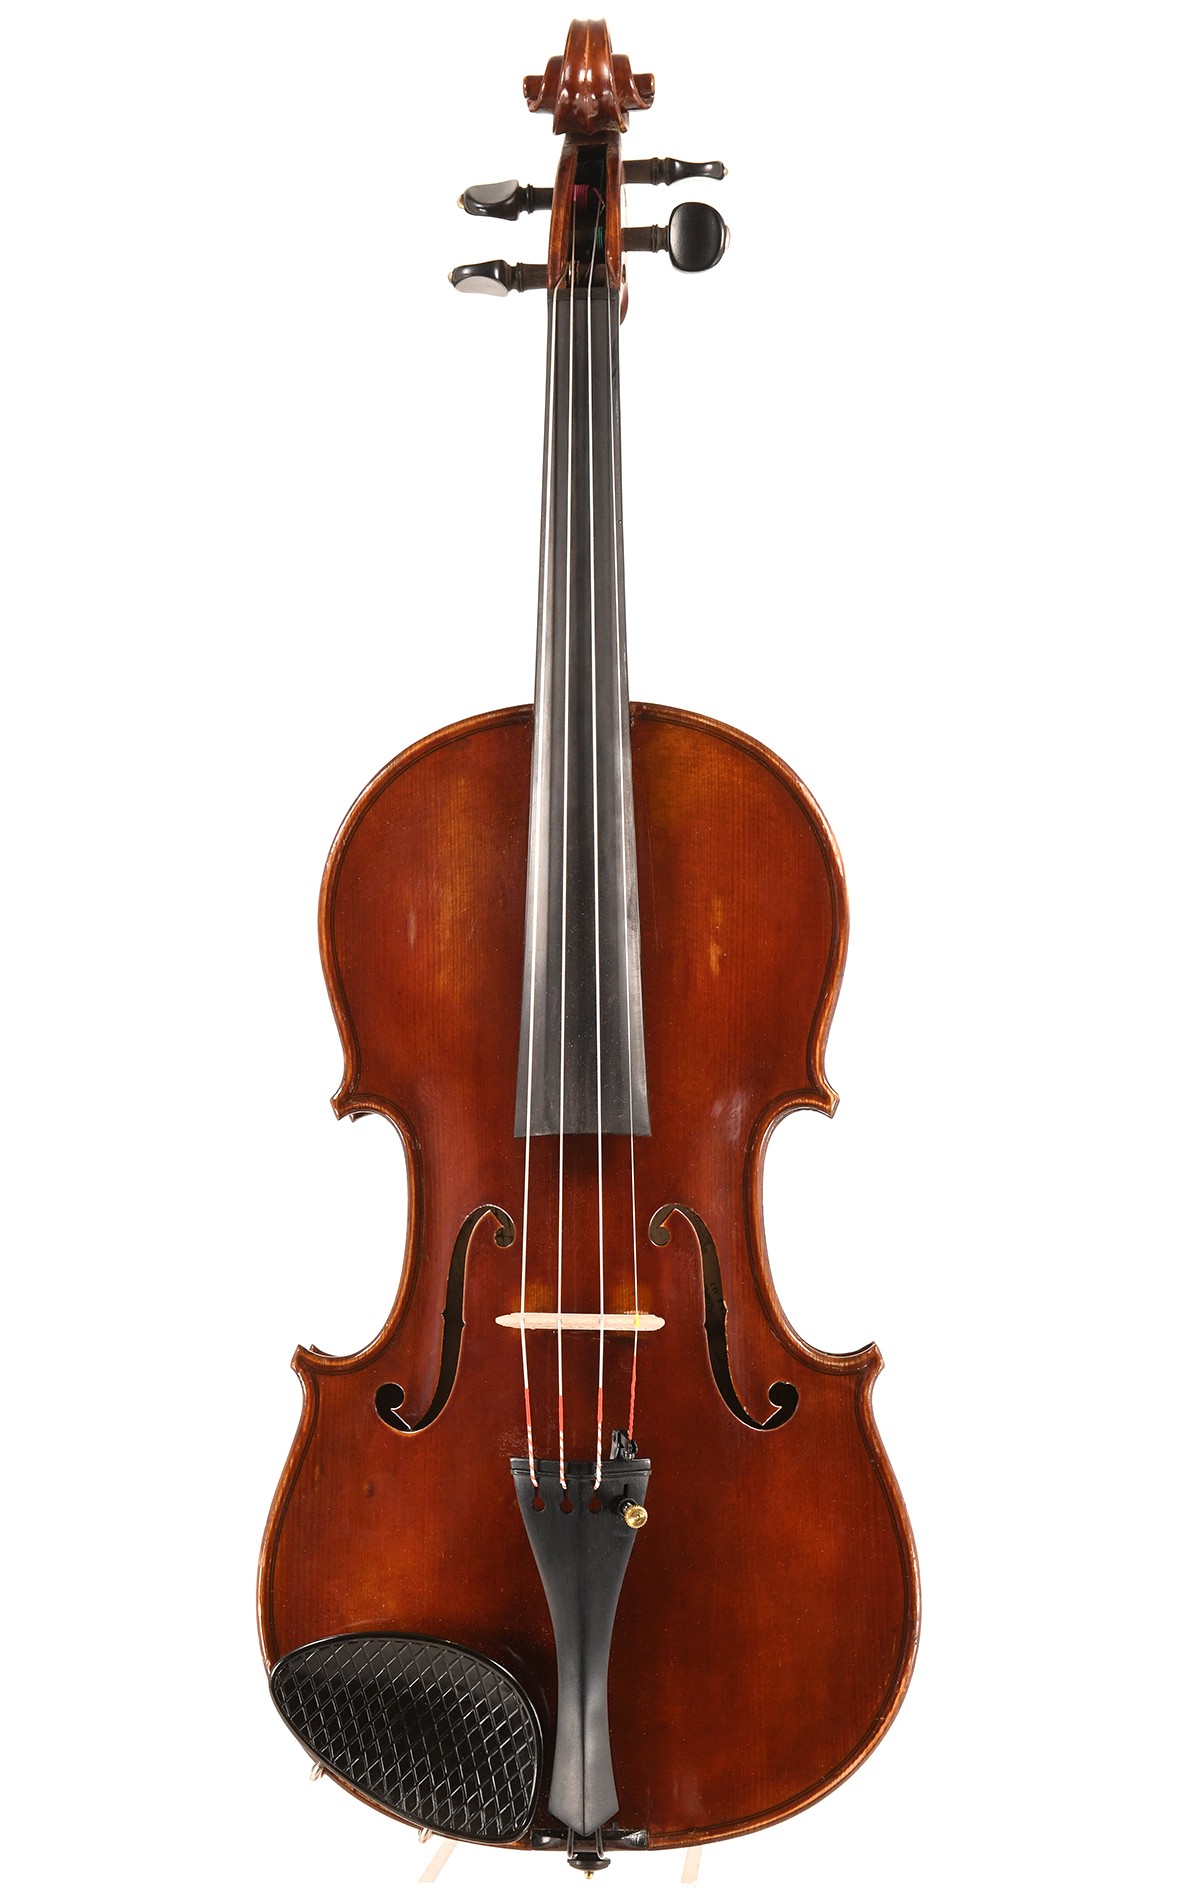 SALE Paul Bisch, French violin after Stradivarius